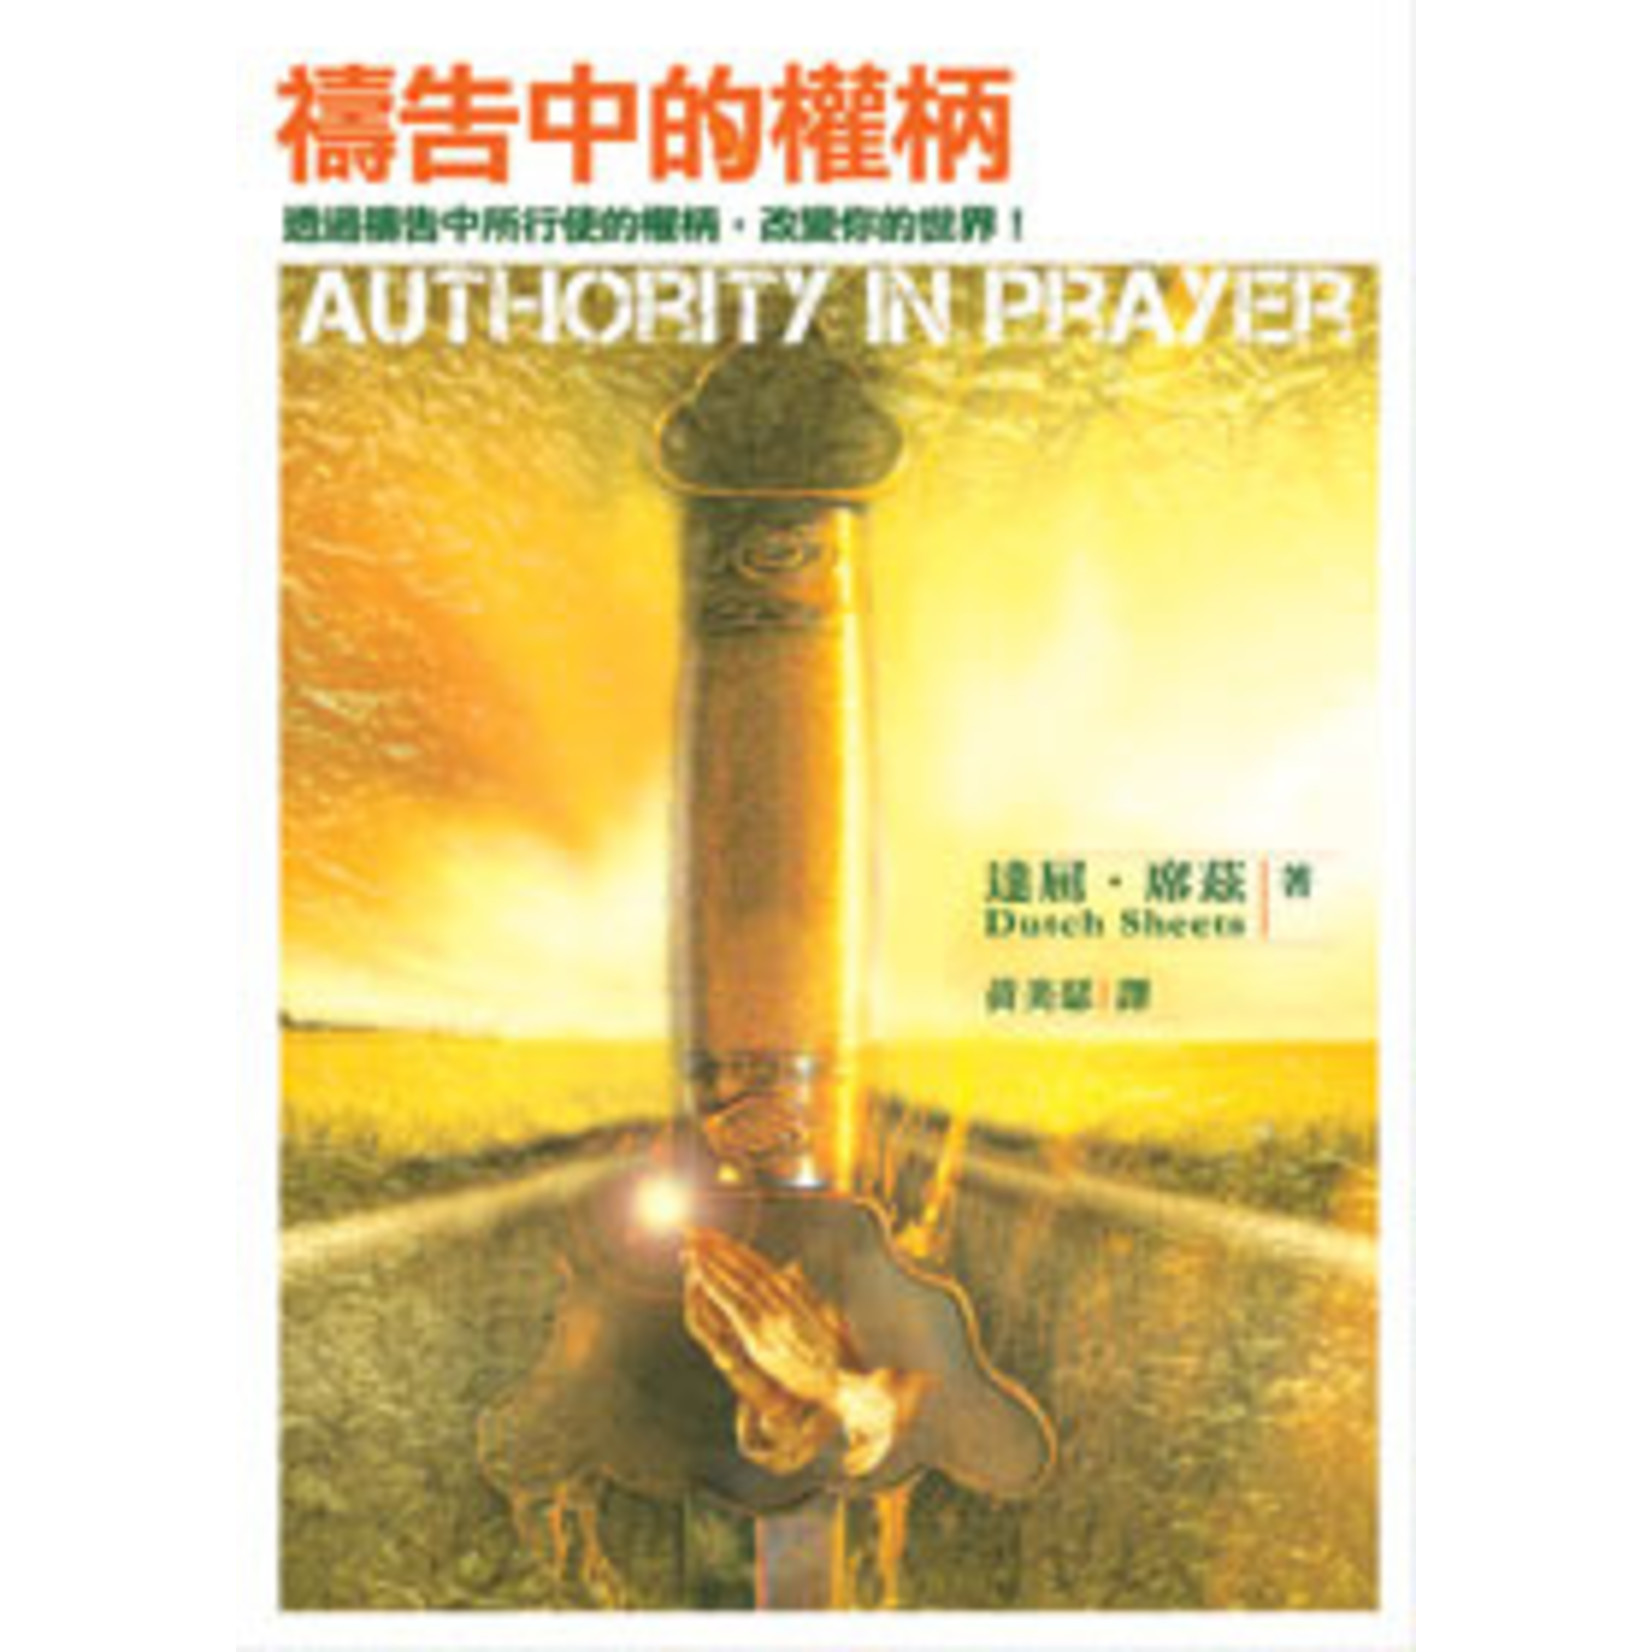 以琳 Elim (TW) 禱告中的權柄 Authority in Prayer